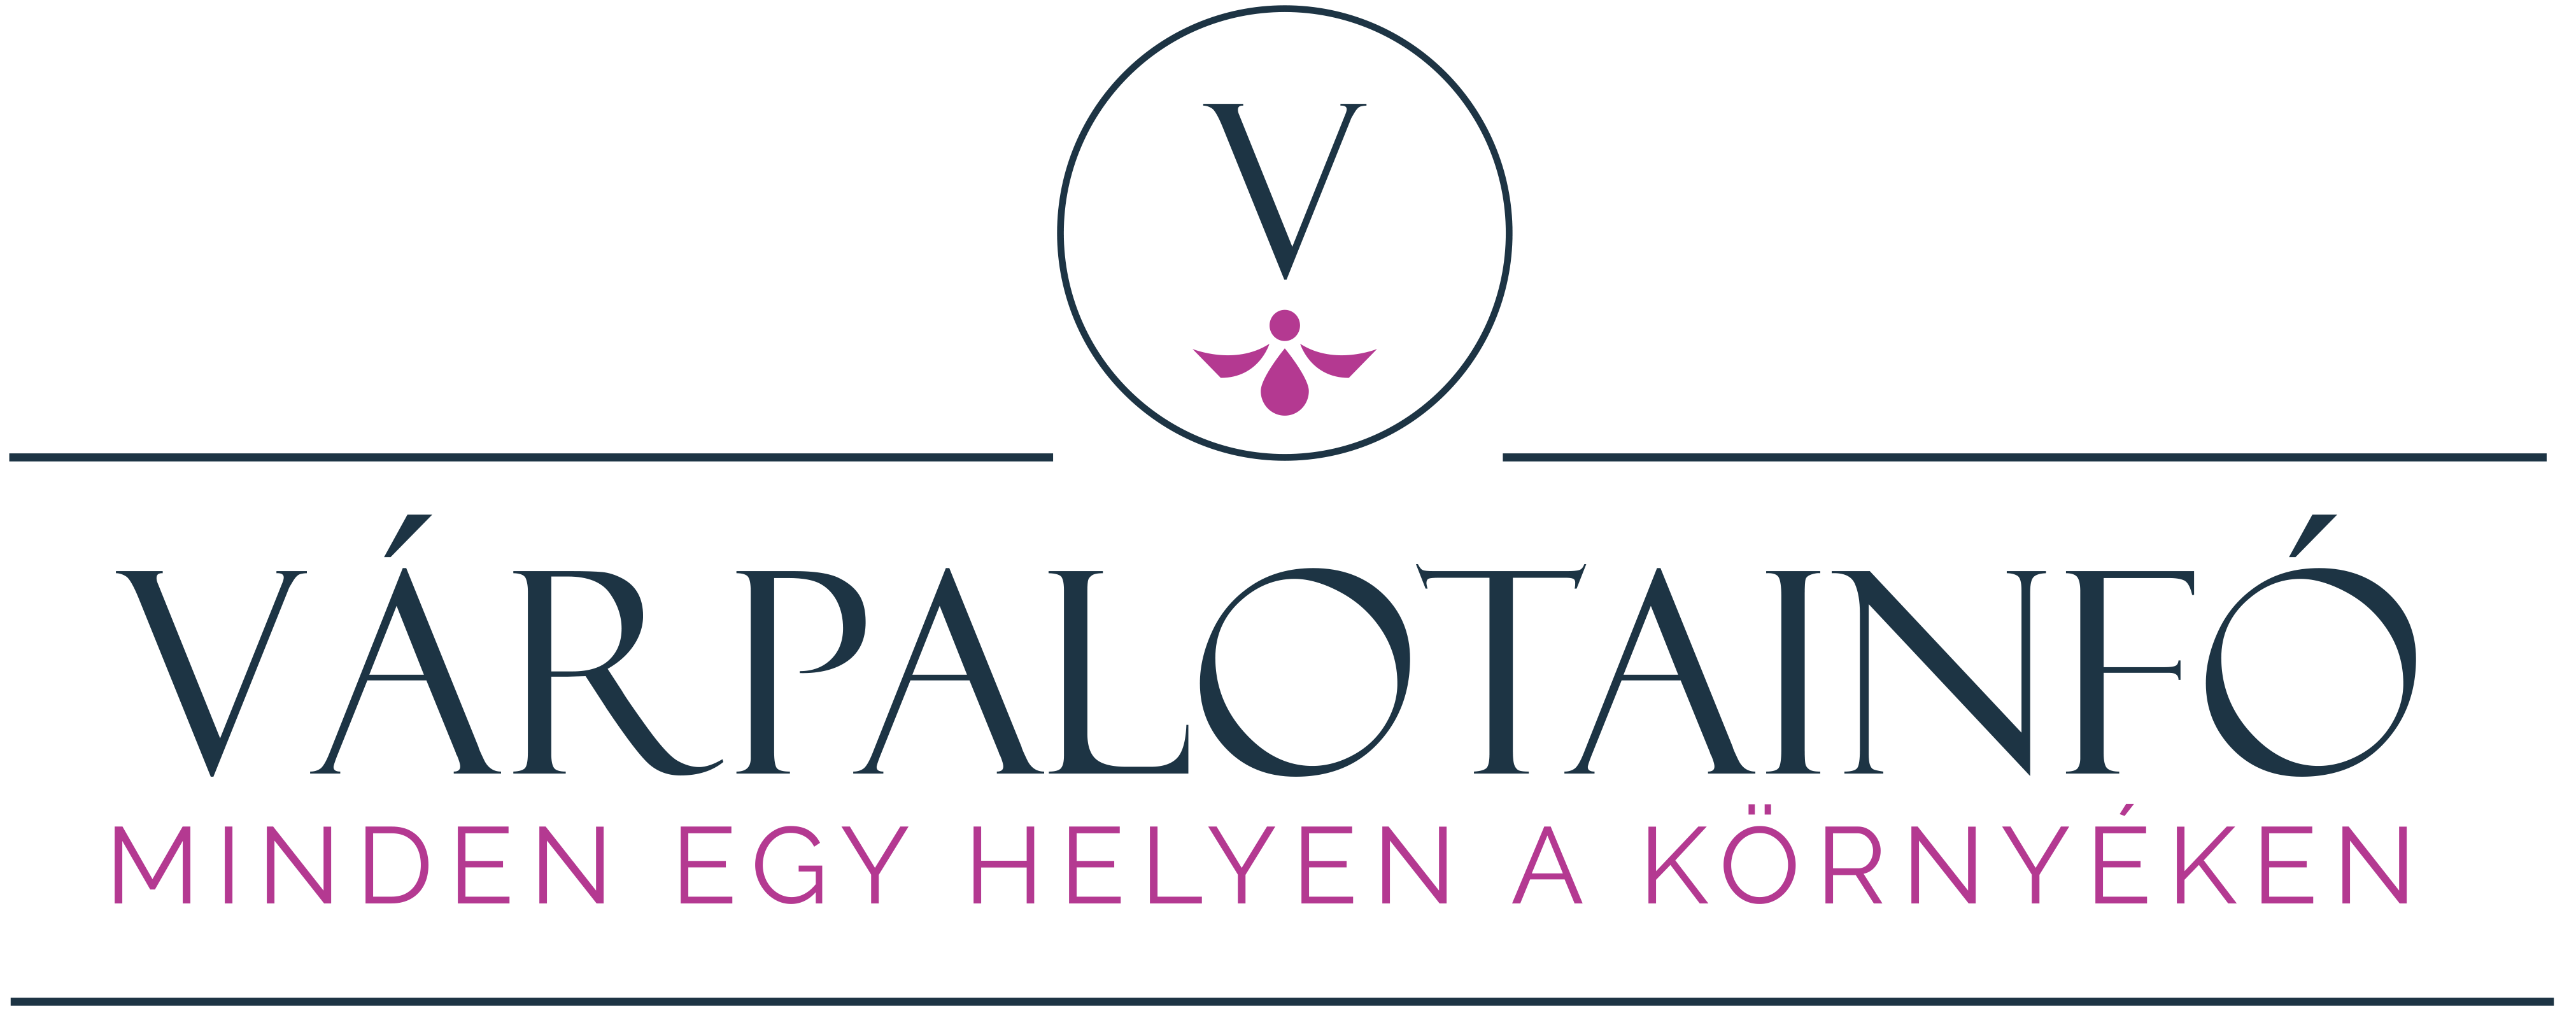 Várpalotainfo_logo